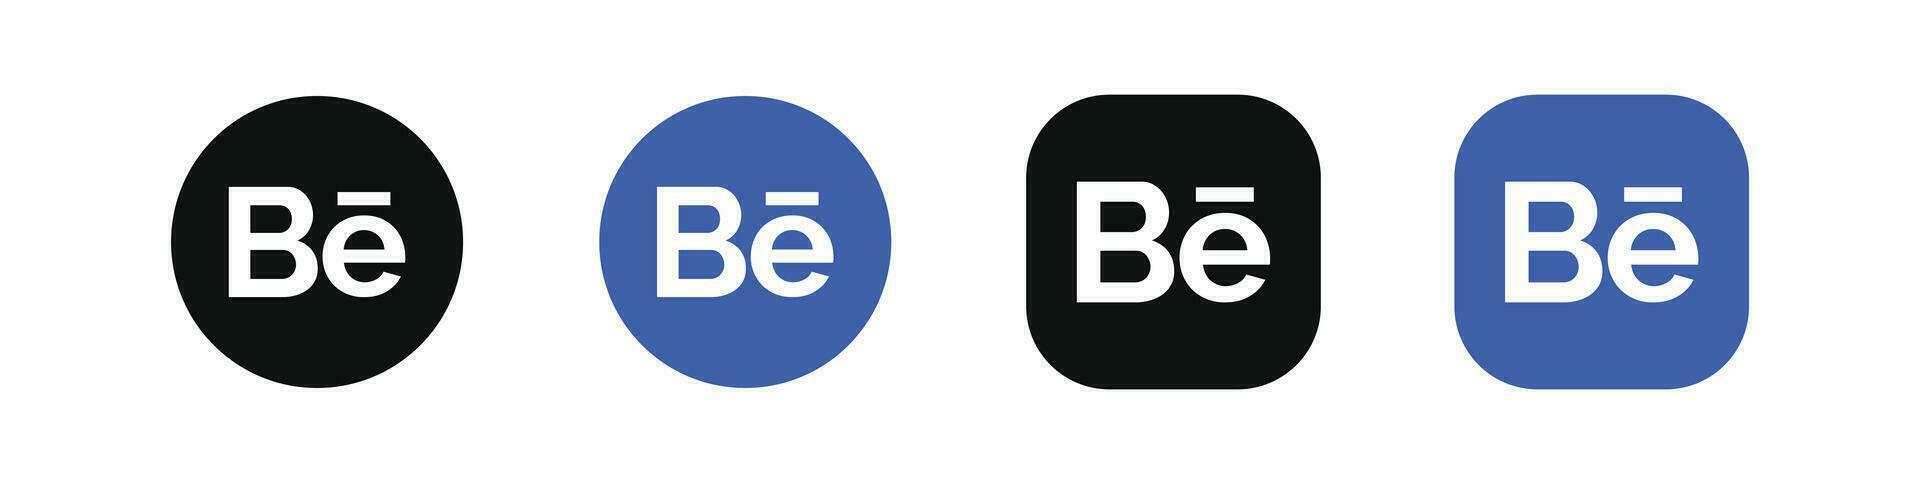 Behance icona. Behance sociale media logo. Behance impostato di sociale media loghi. vettore